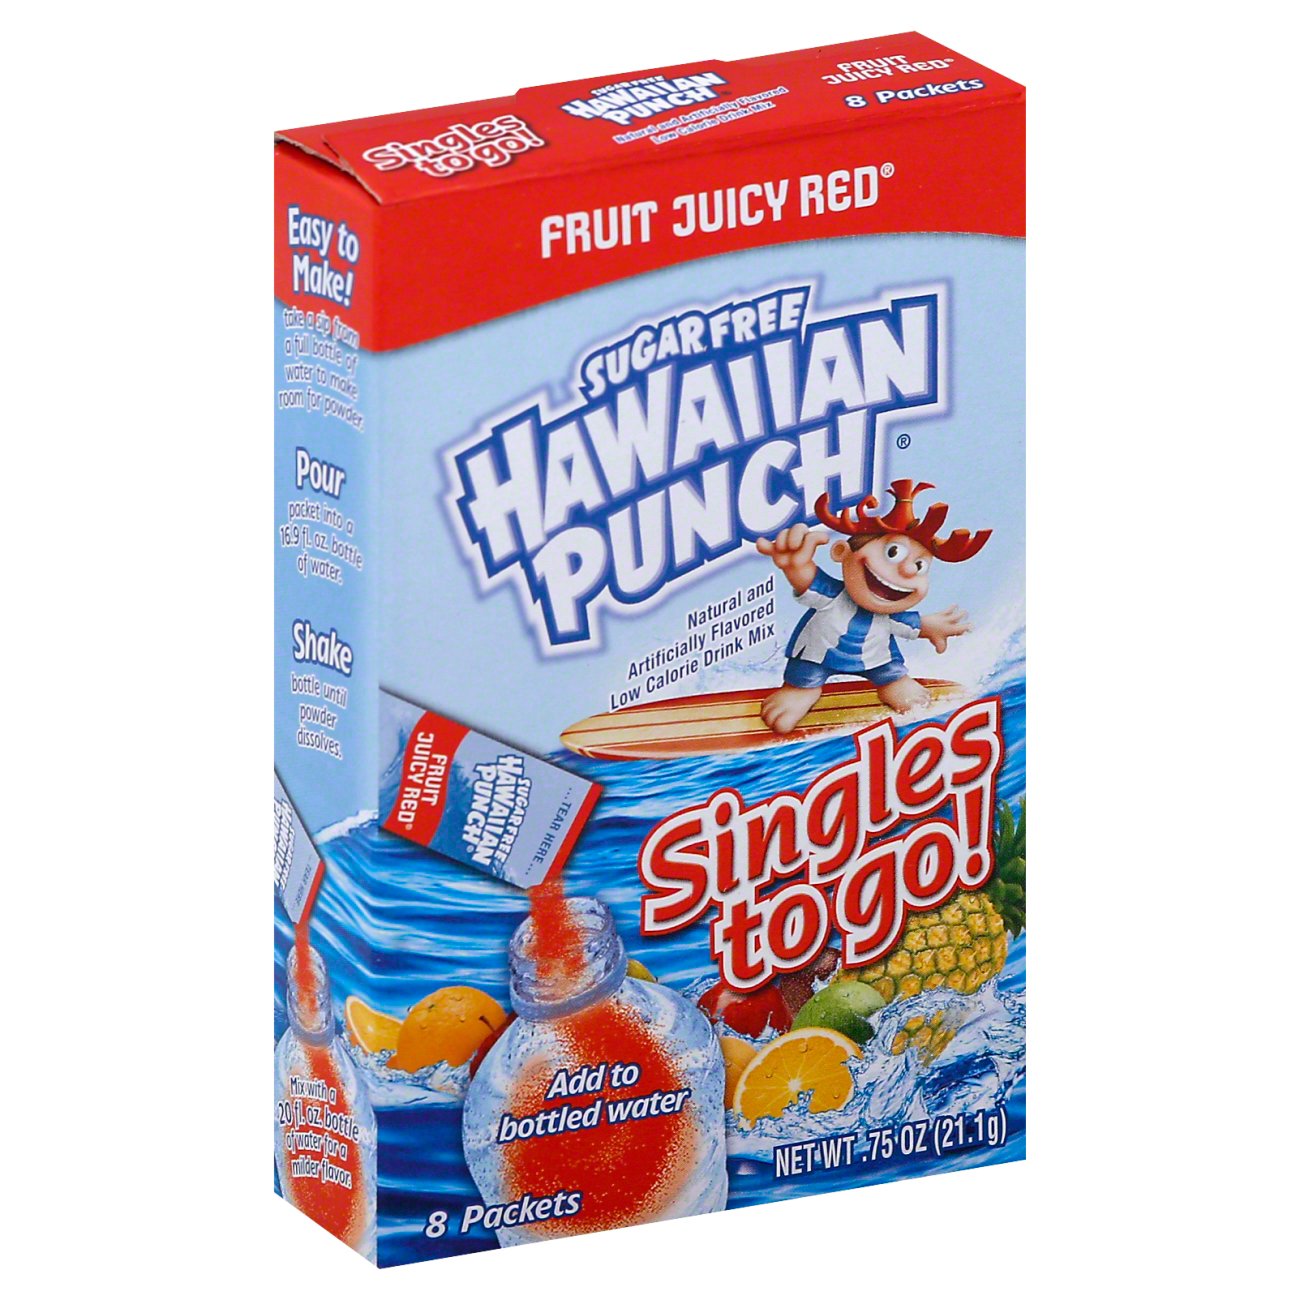 Hawaiian Punch (Variety 2)Drink Mix Single Packet